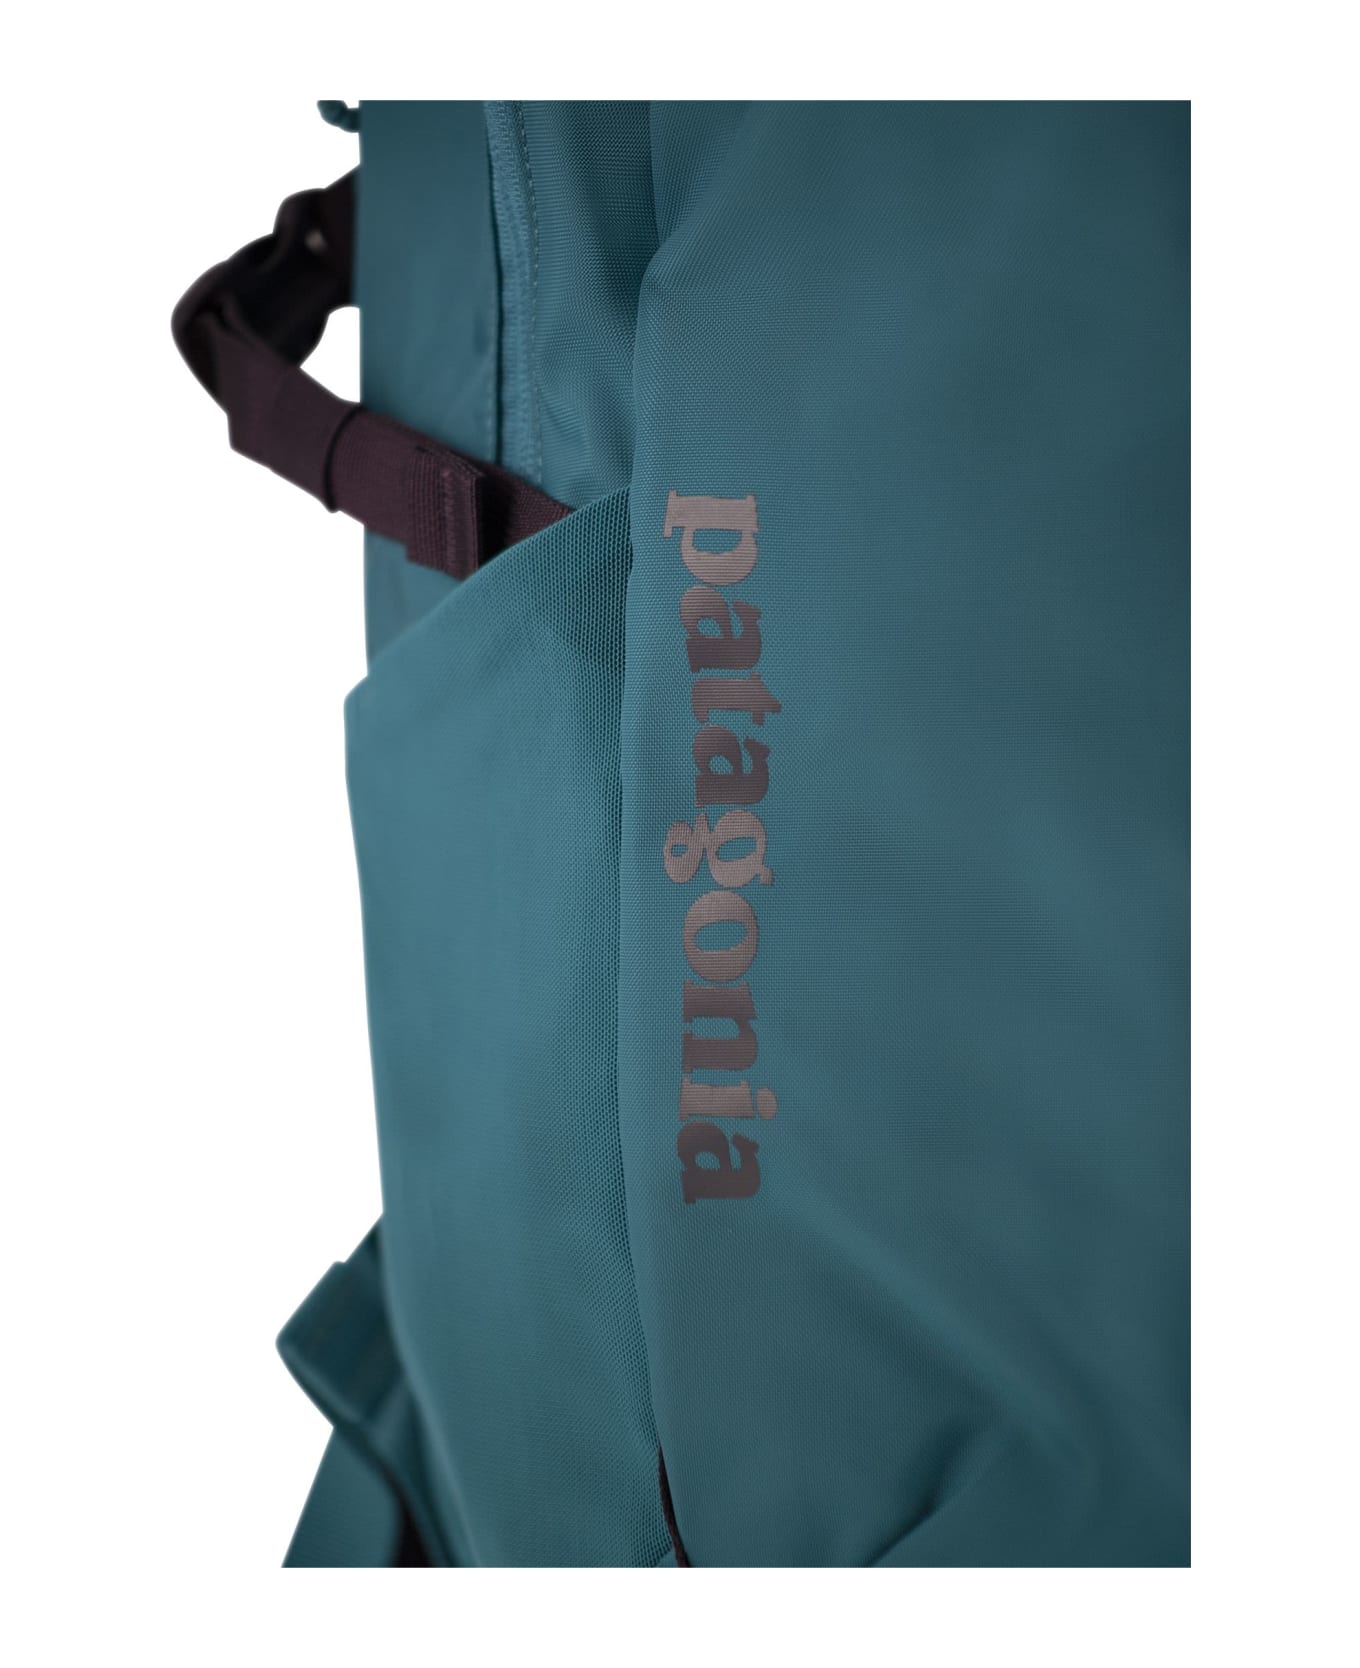 Patagonia Refugio - Backpack - Light Blue